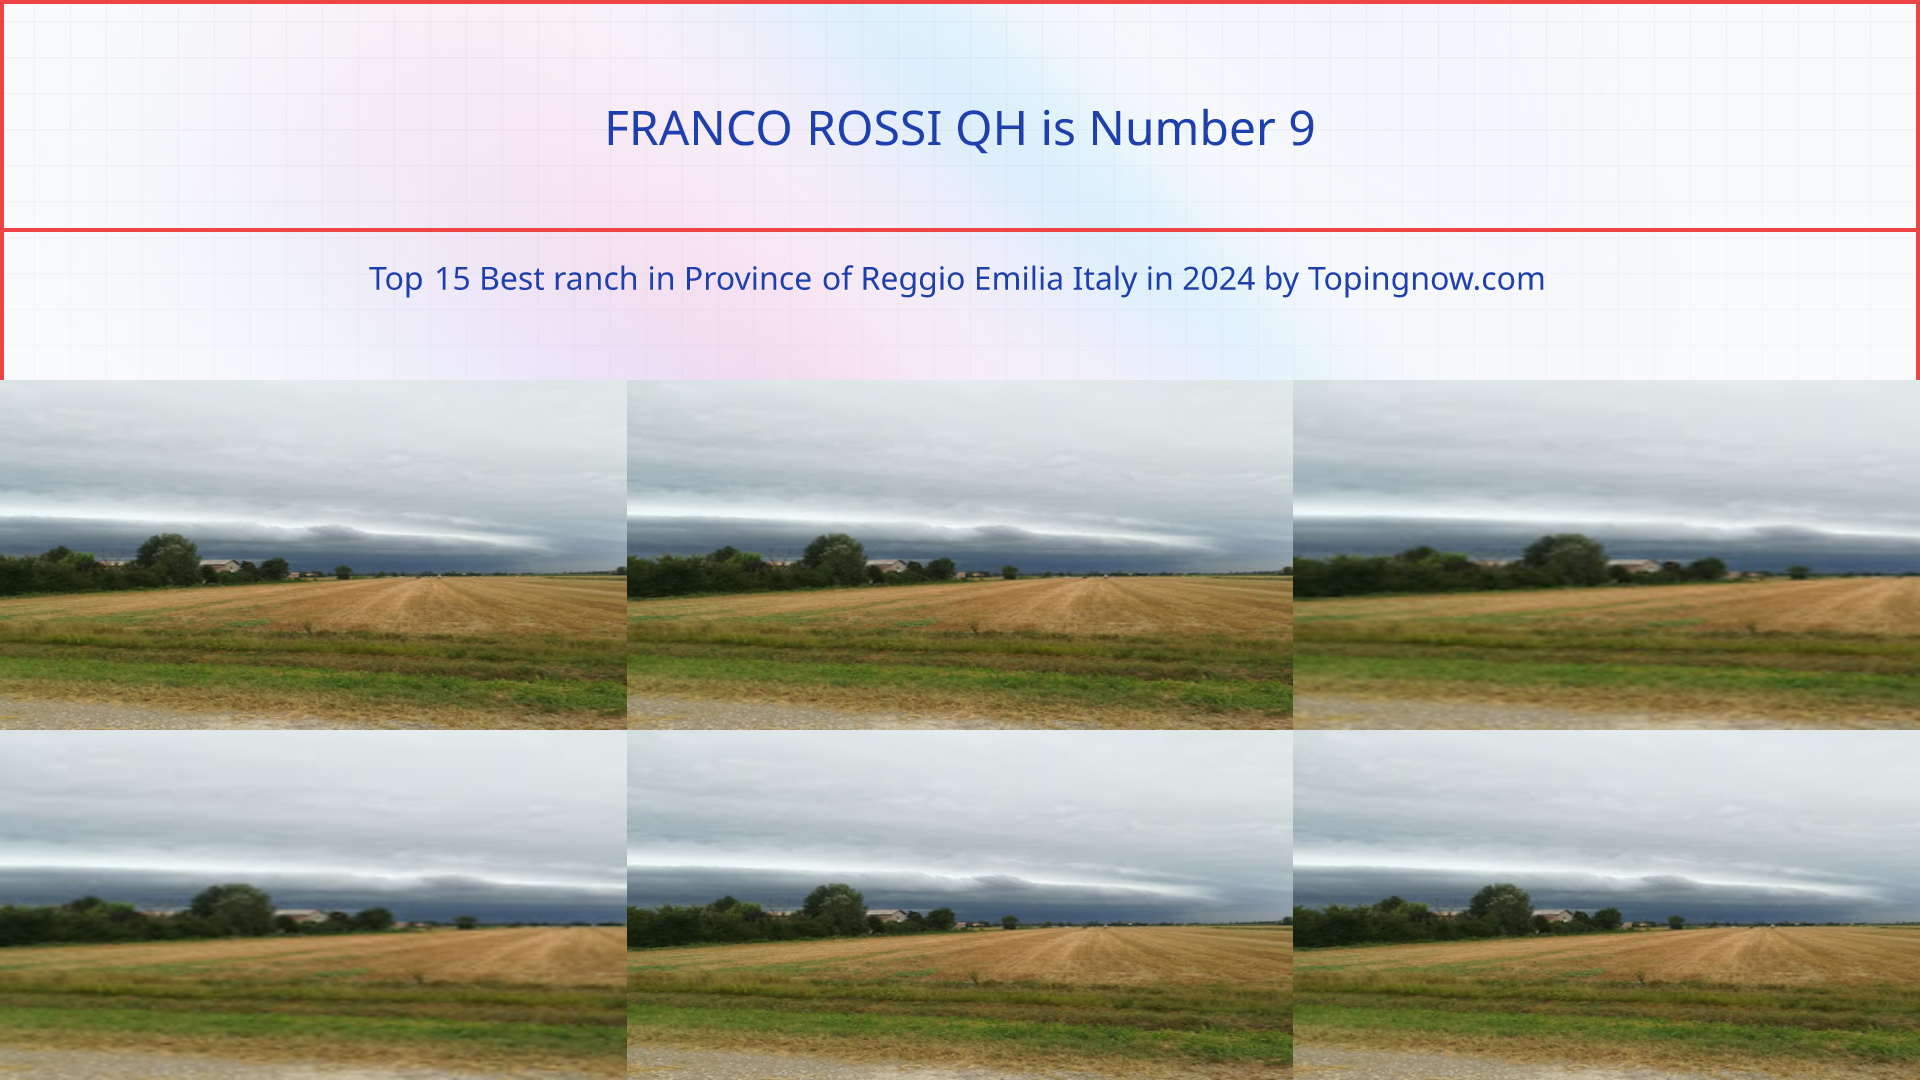 FRANCO ROSSI QH: Top 15 Best ranch in Province of Reggio Emilia Italy in 2024